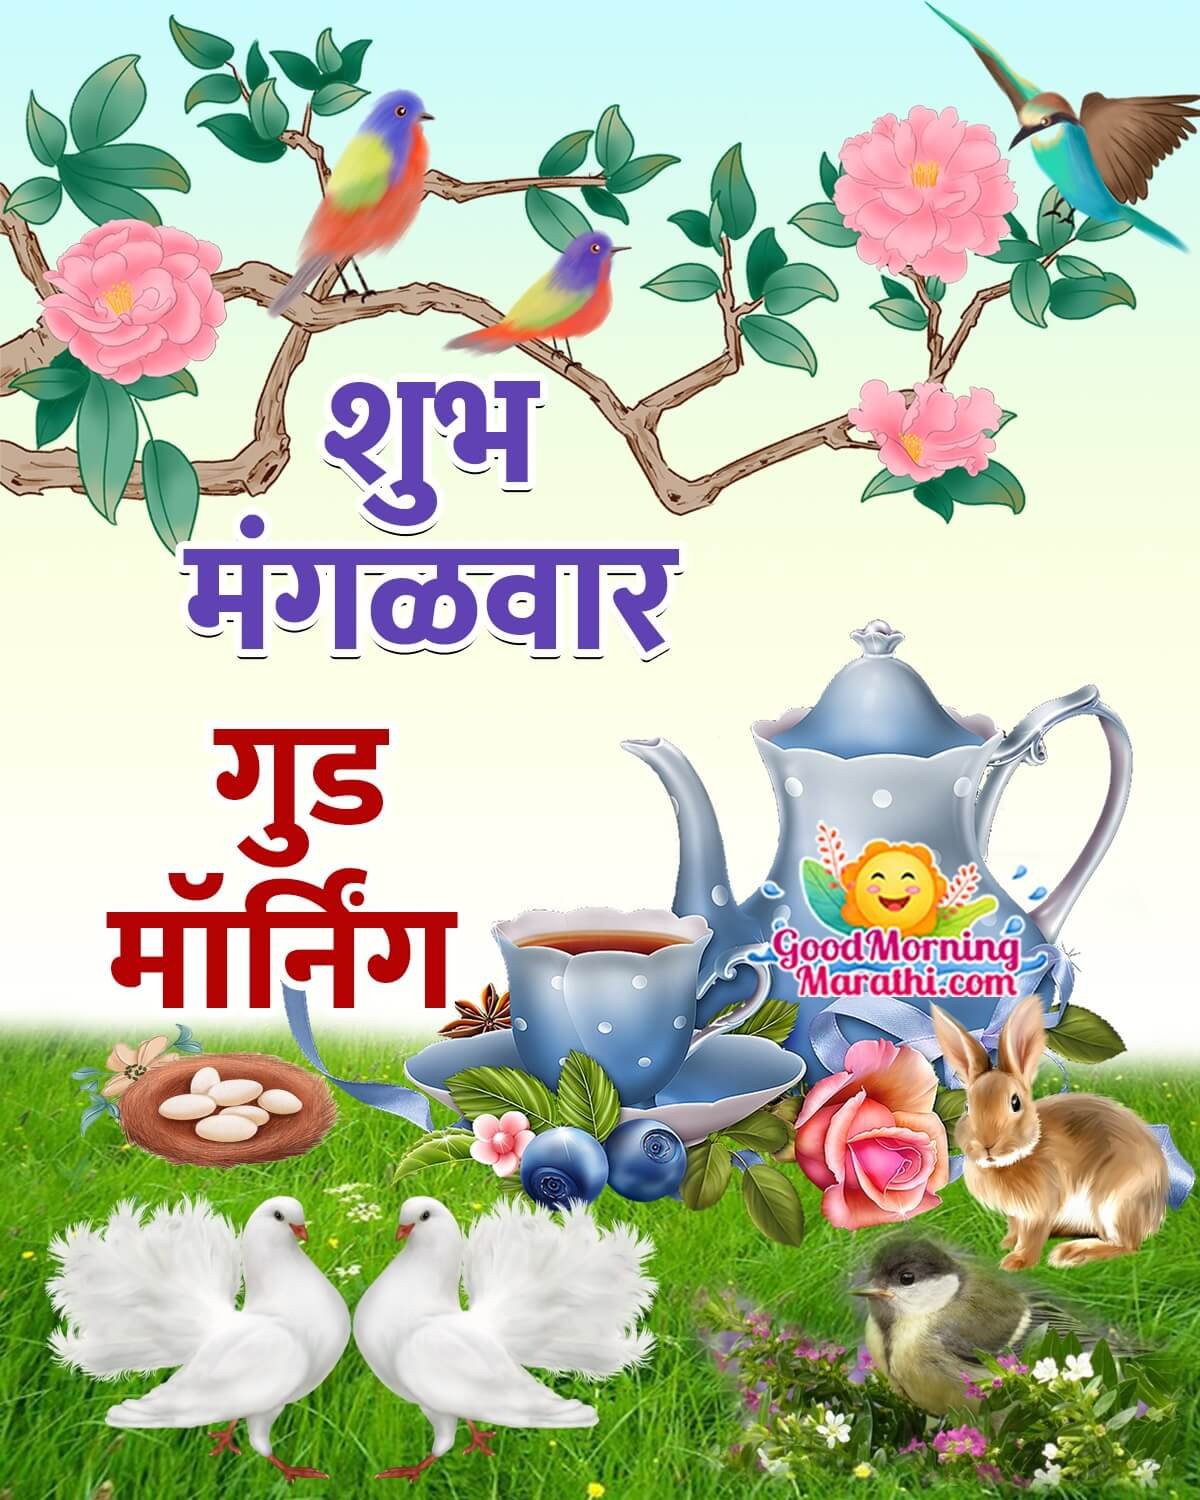 Good Morning Happy Tuesday Images In Marathi - Good Morning Wishes ...